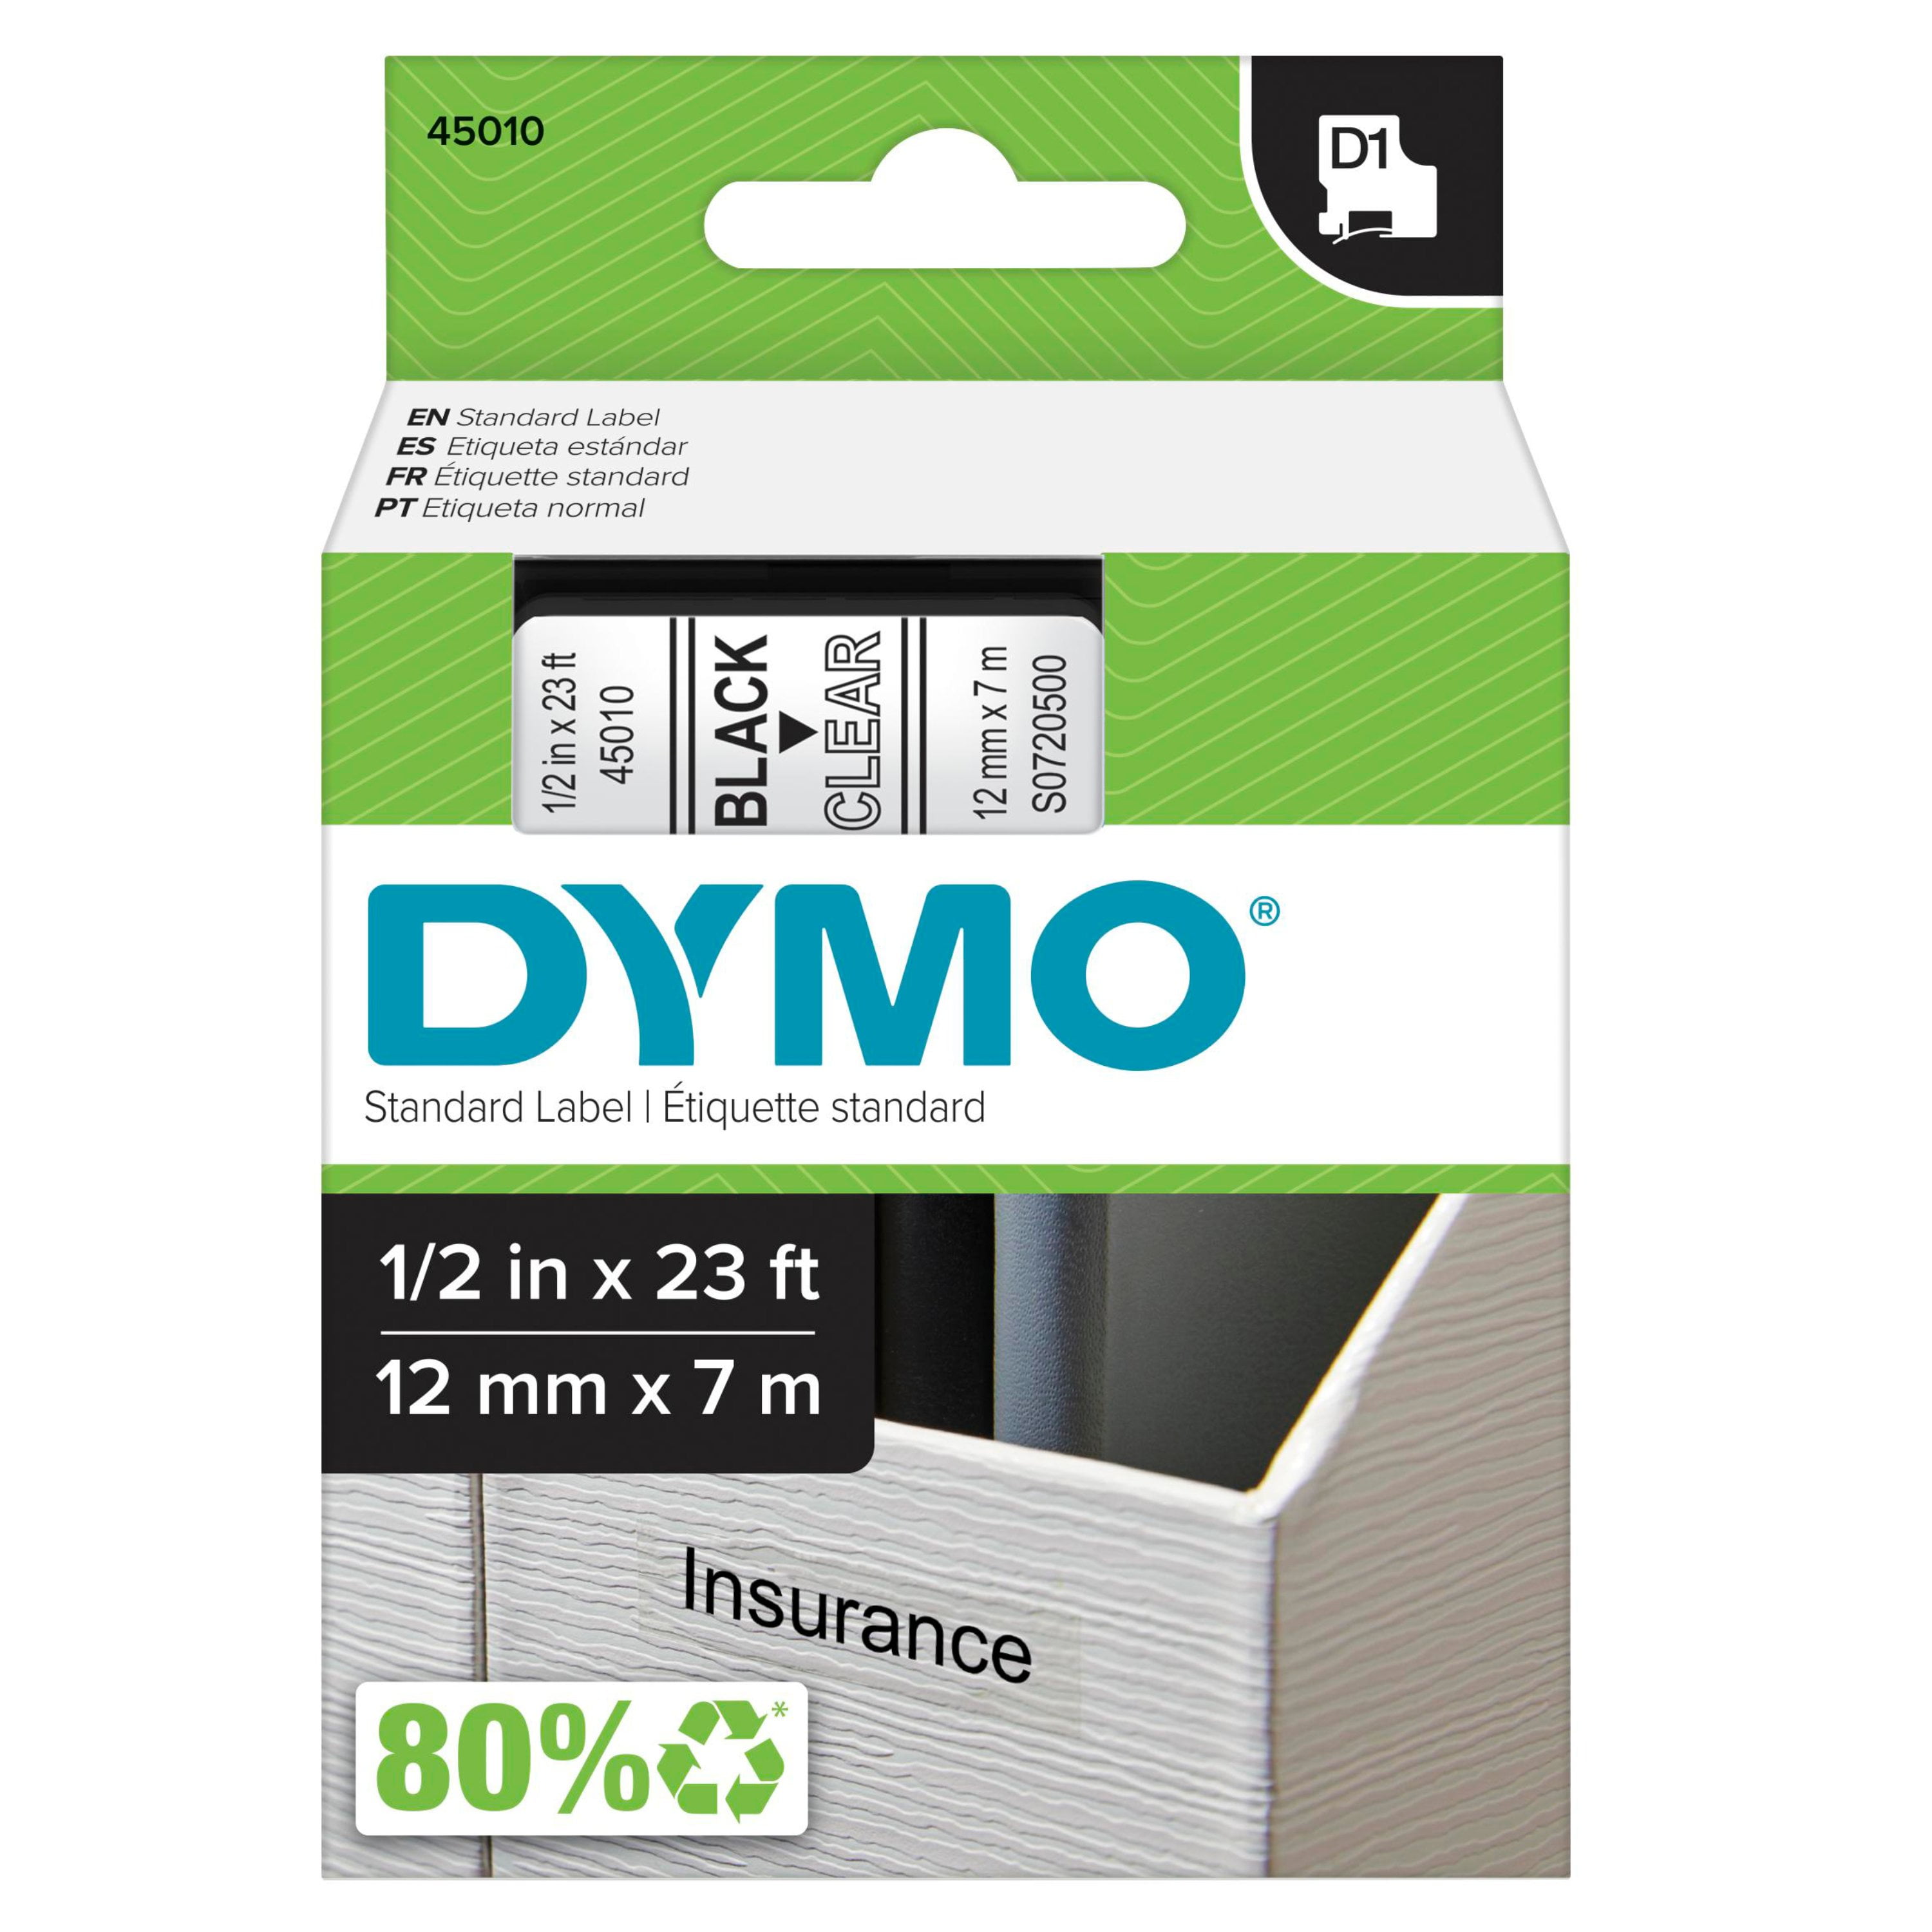 DYMO Labels 